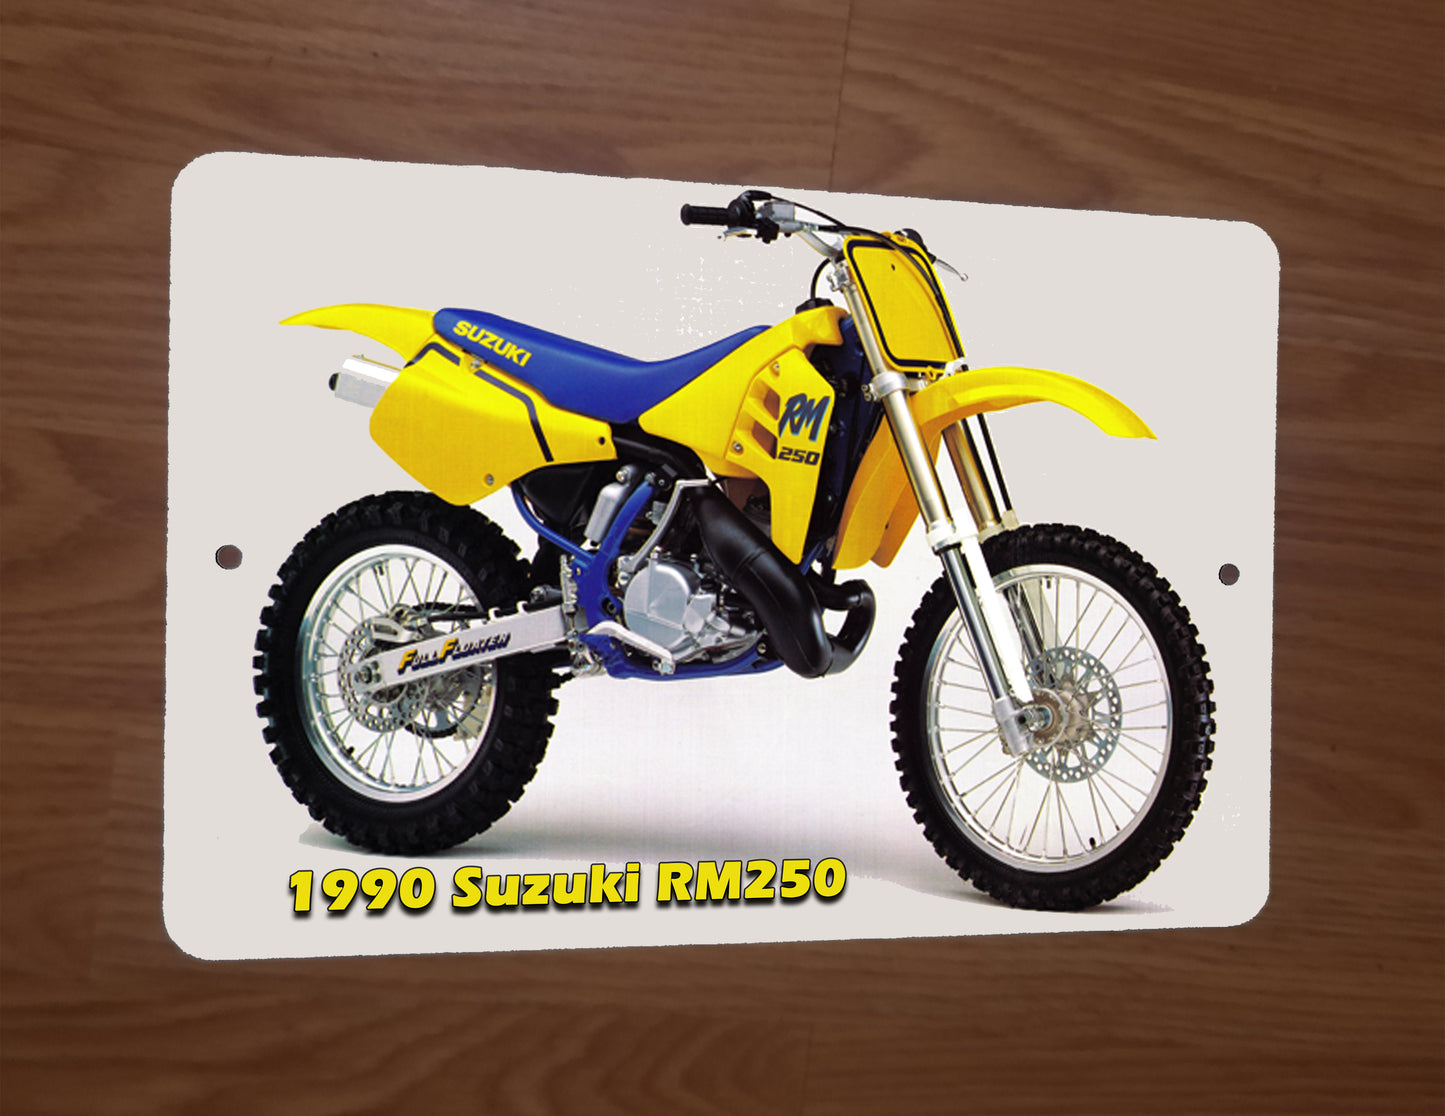 1990 Suzuki RM250 Motocross Motor Cycle Dirt Bike Photo 8x12 Metal Wall Sign Garage Poster